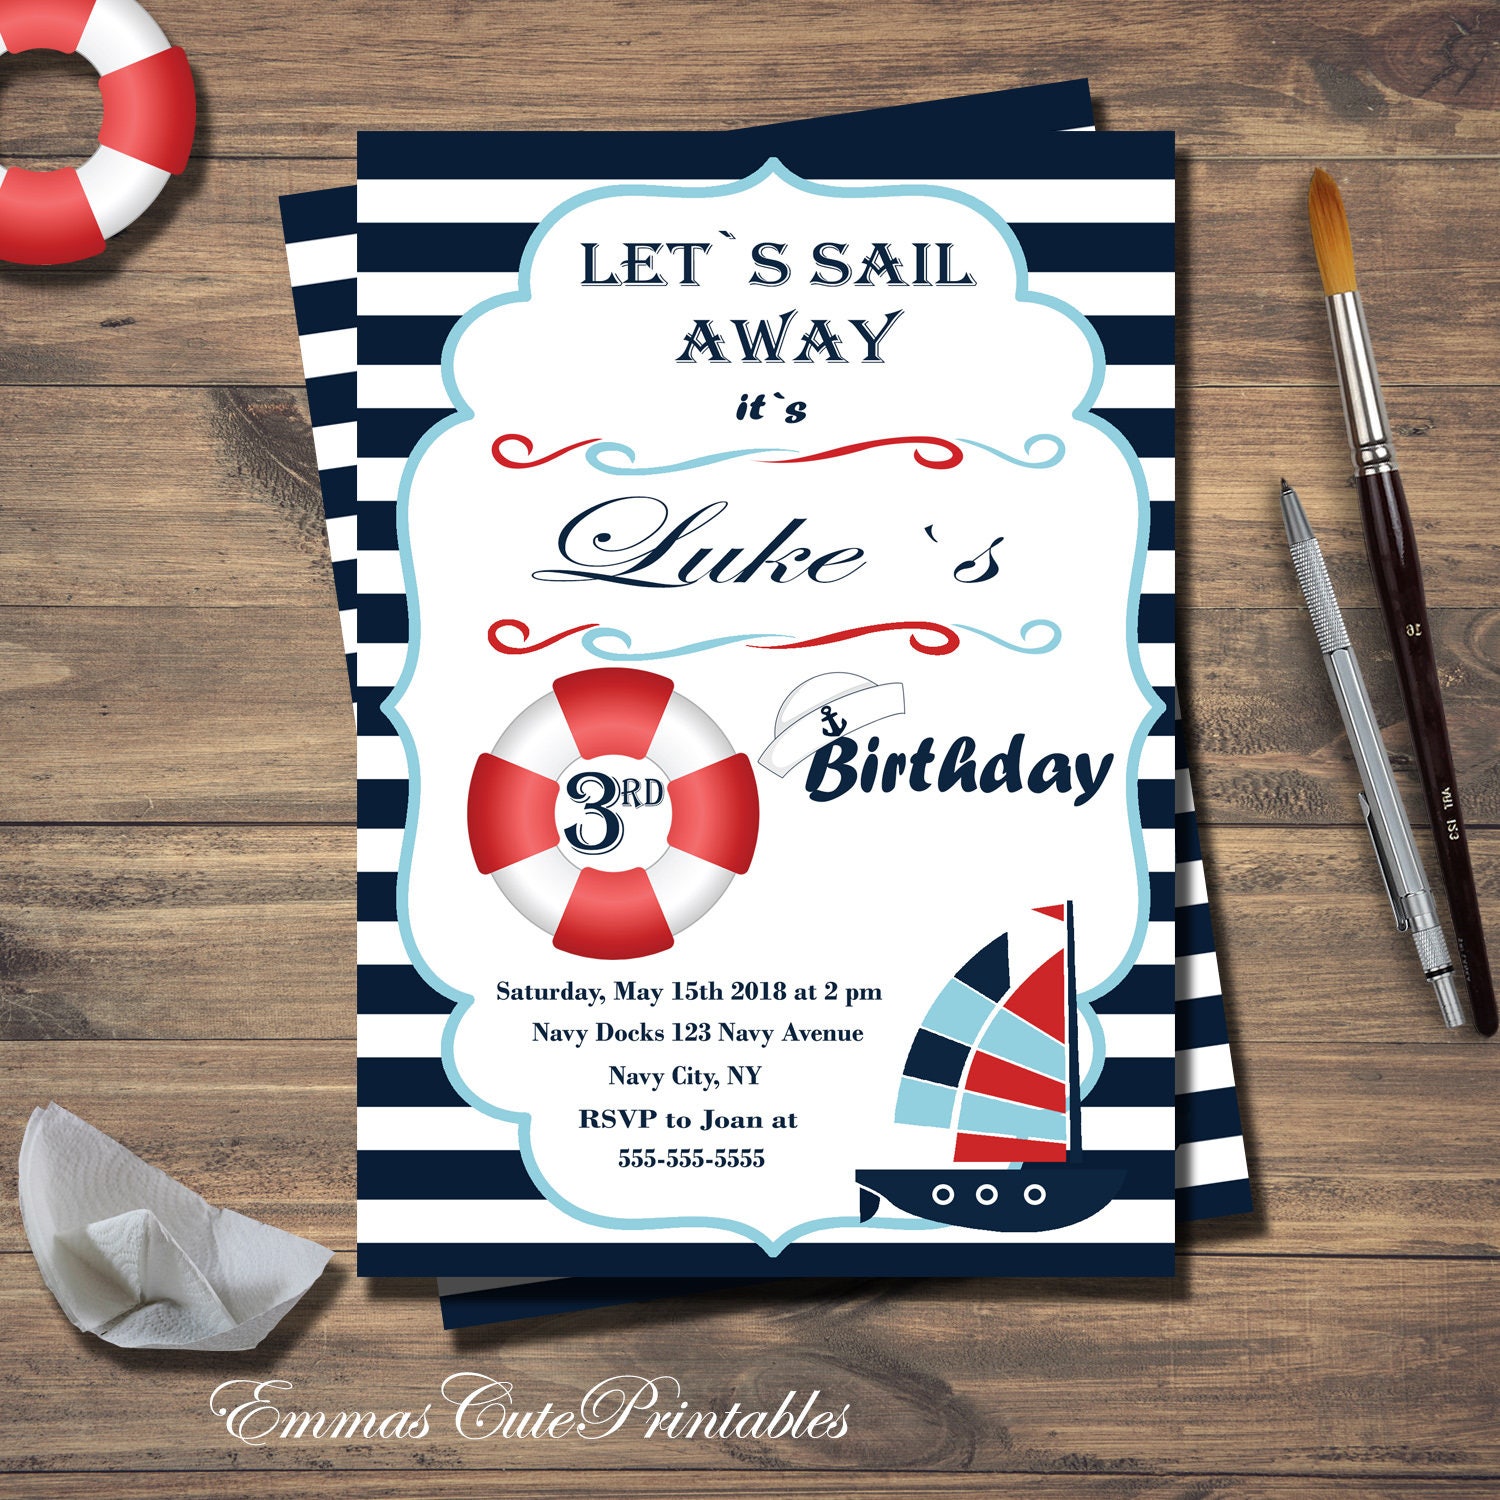 Nautical Birthday Party Invitation, Navy Blue and red invitation, Lets sail  away, 1st,2nd, 3rd birthday, printable birthday invitation.